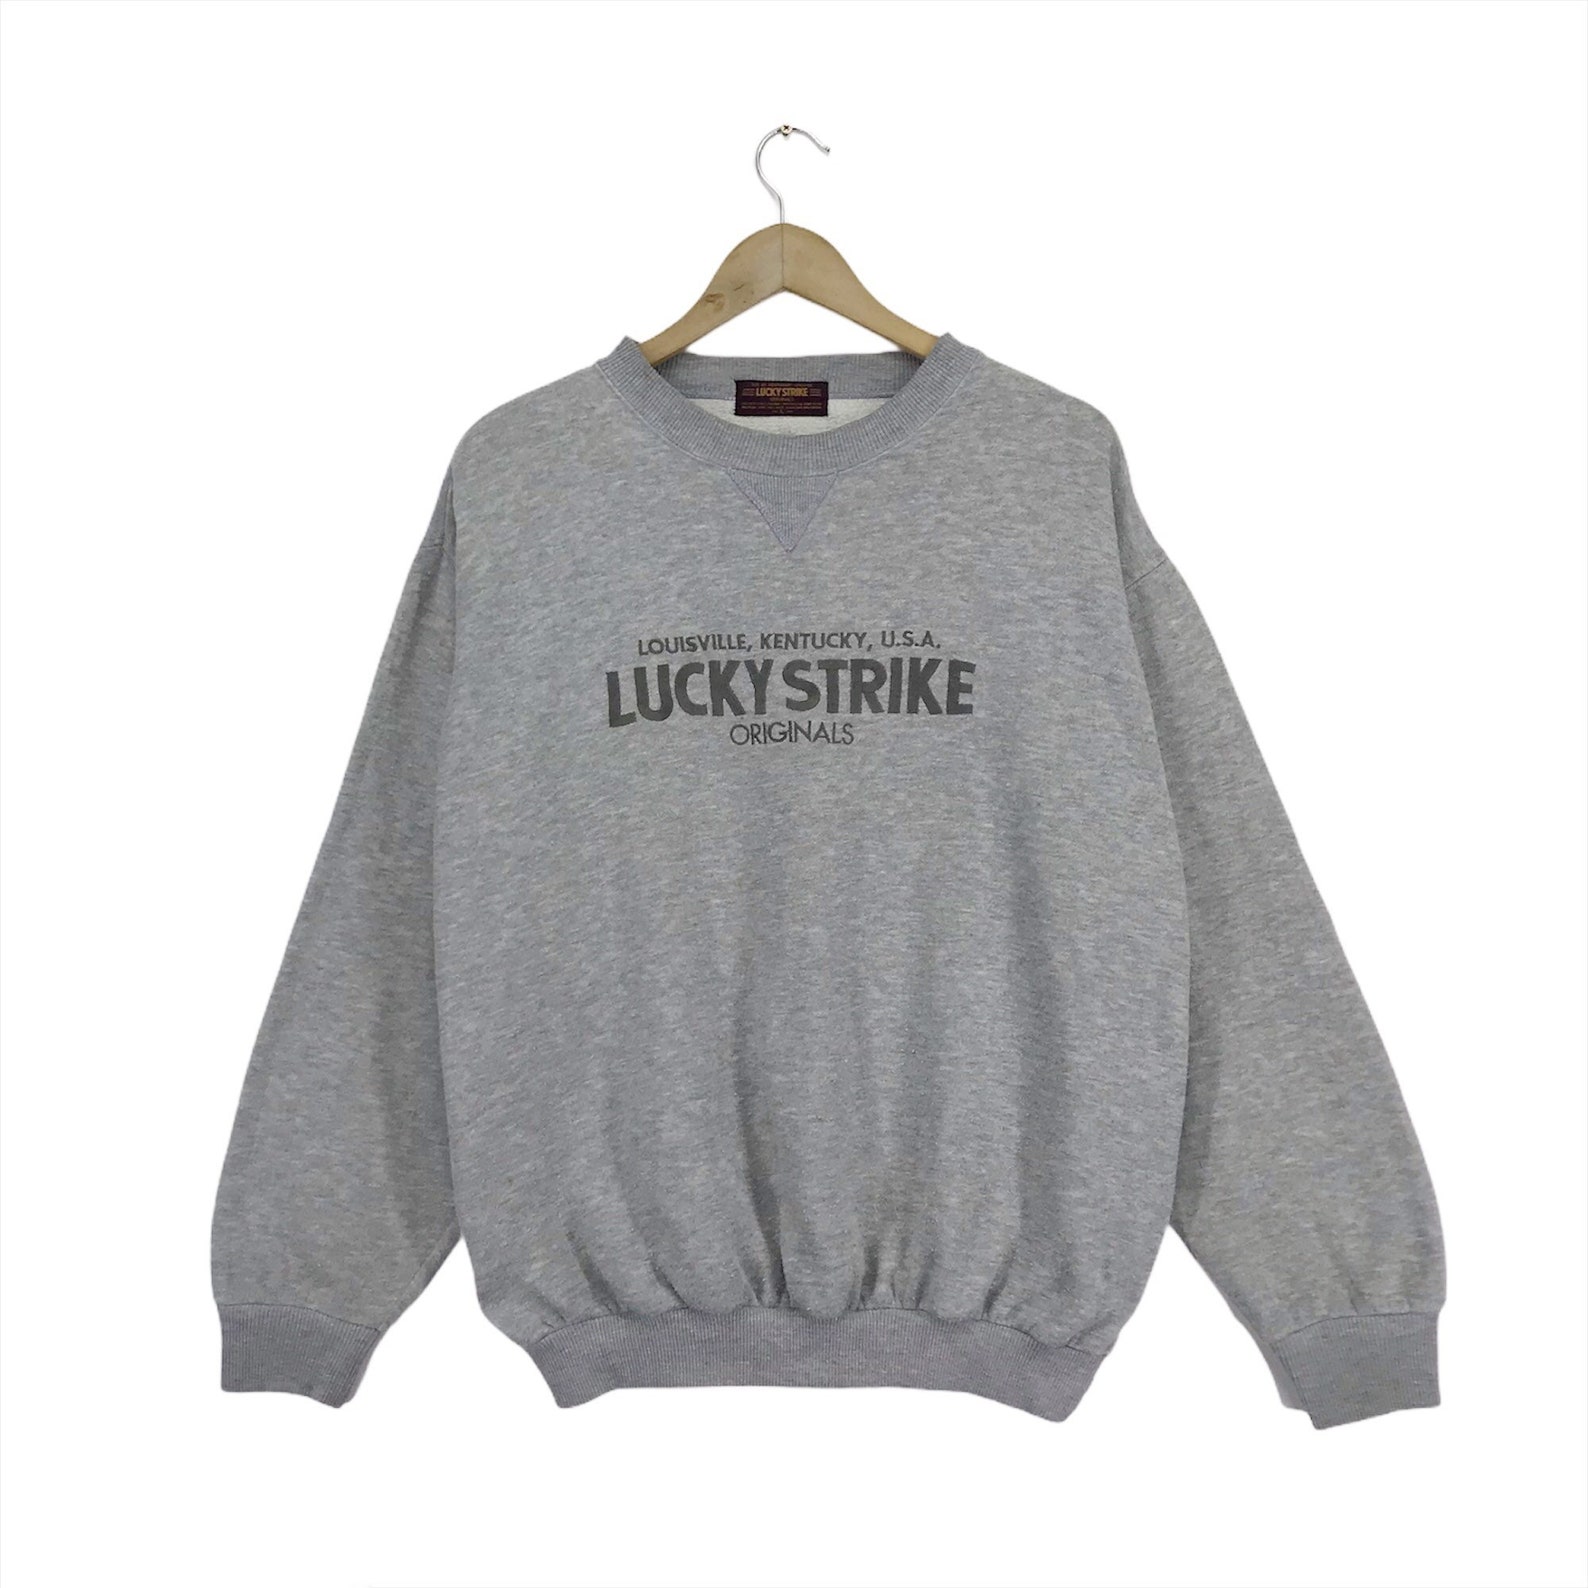 Vintage Lucky Strike Sweatshirt Crewneck Pullover Spellout | Etsy